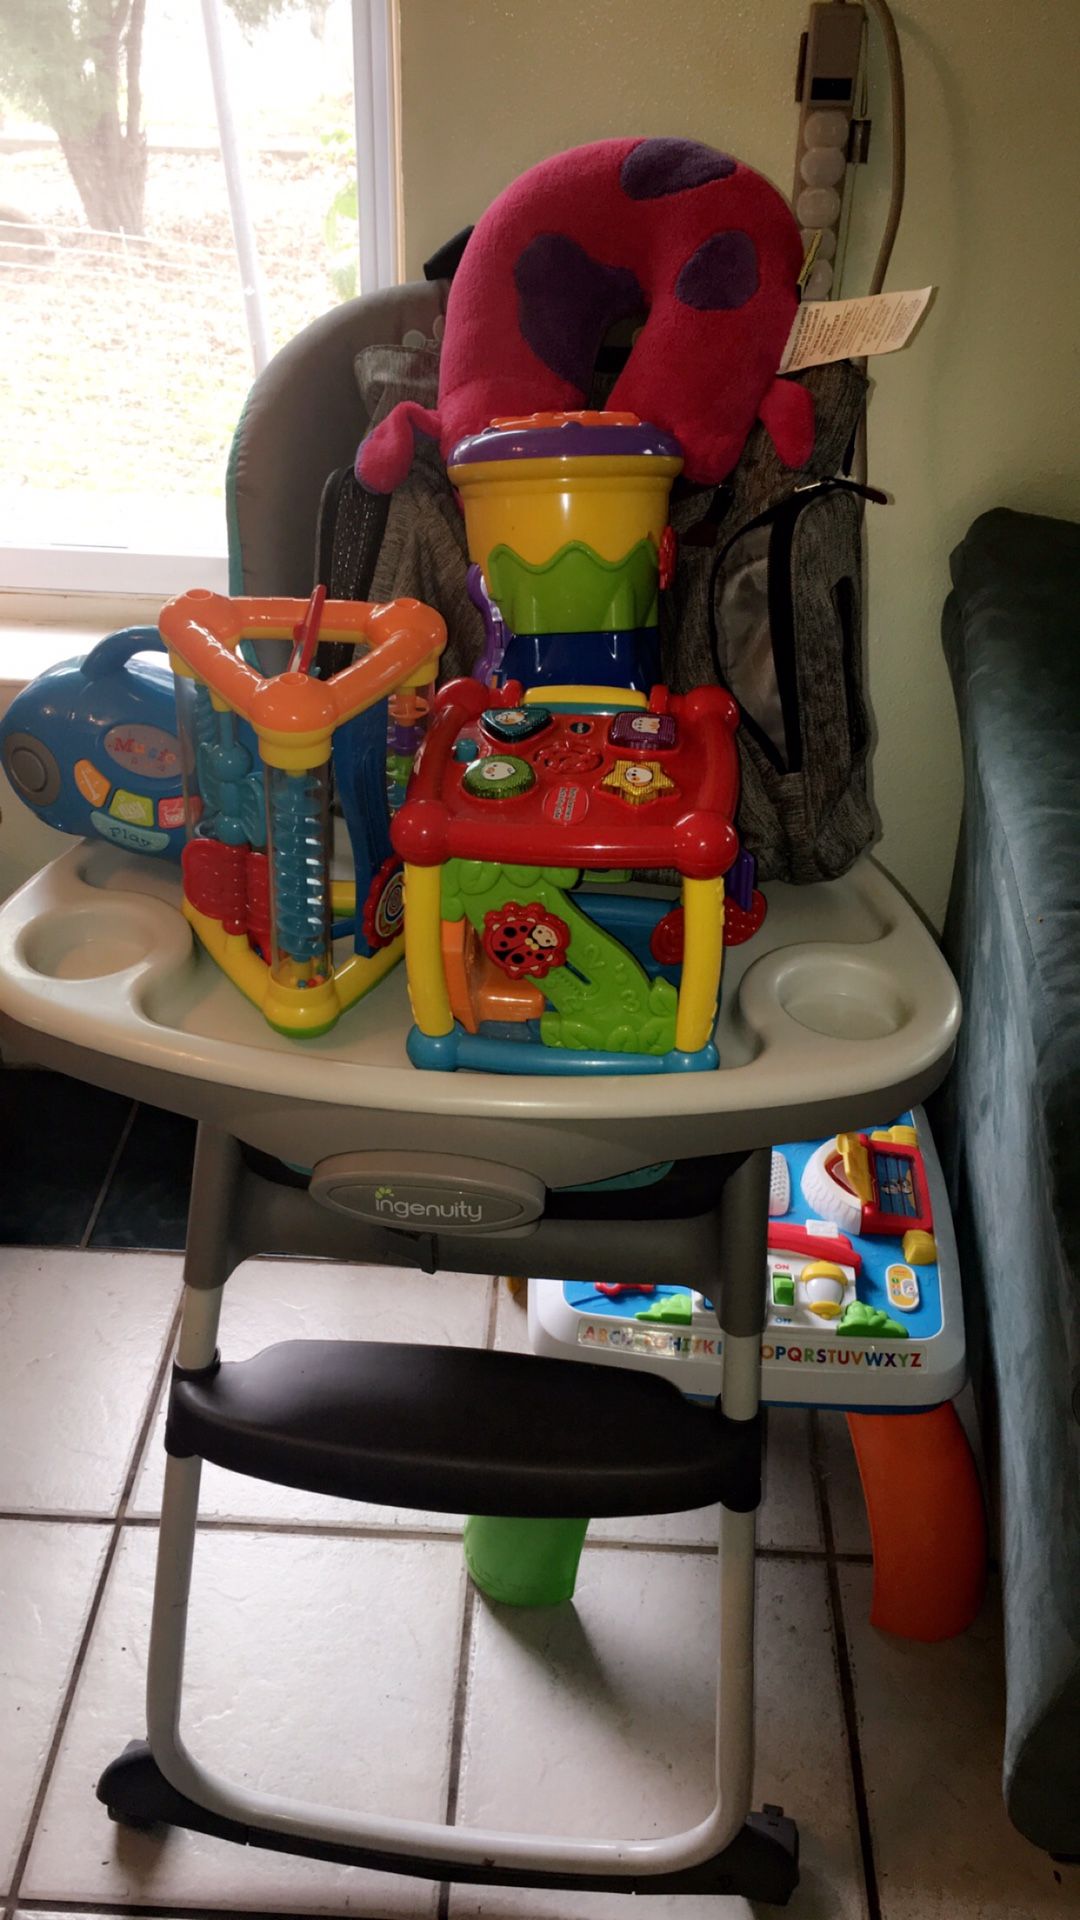 Baby stuff! High chair, toys and Eddie Bauber diaper bag